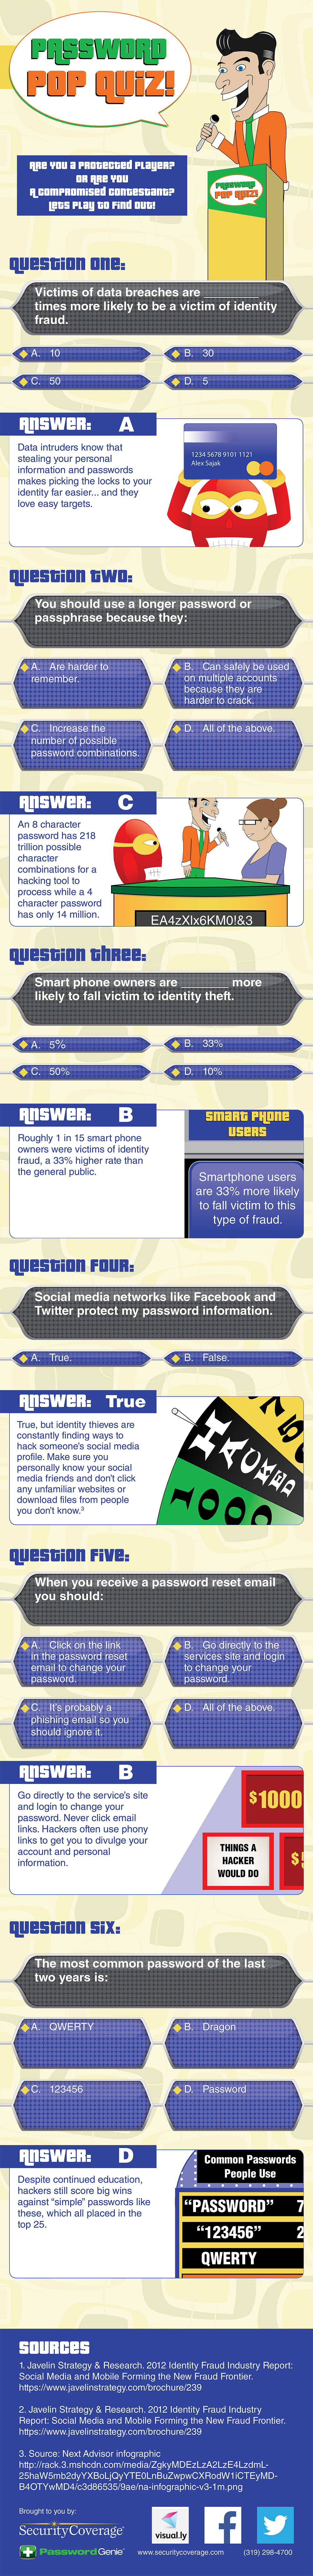 Password_Pop_Quiz_Infographic_web